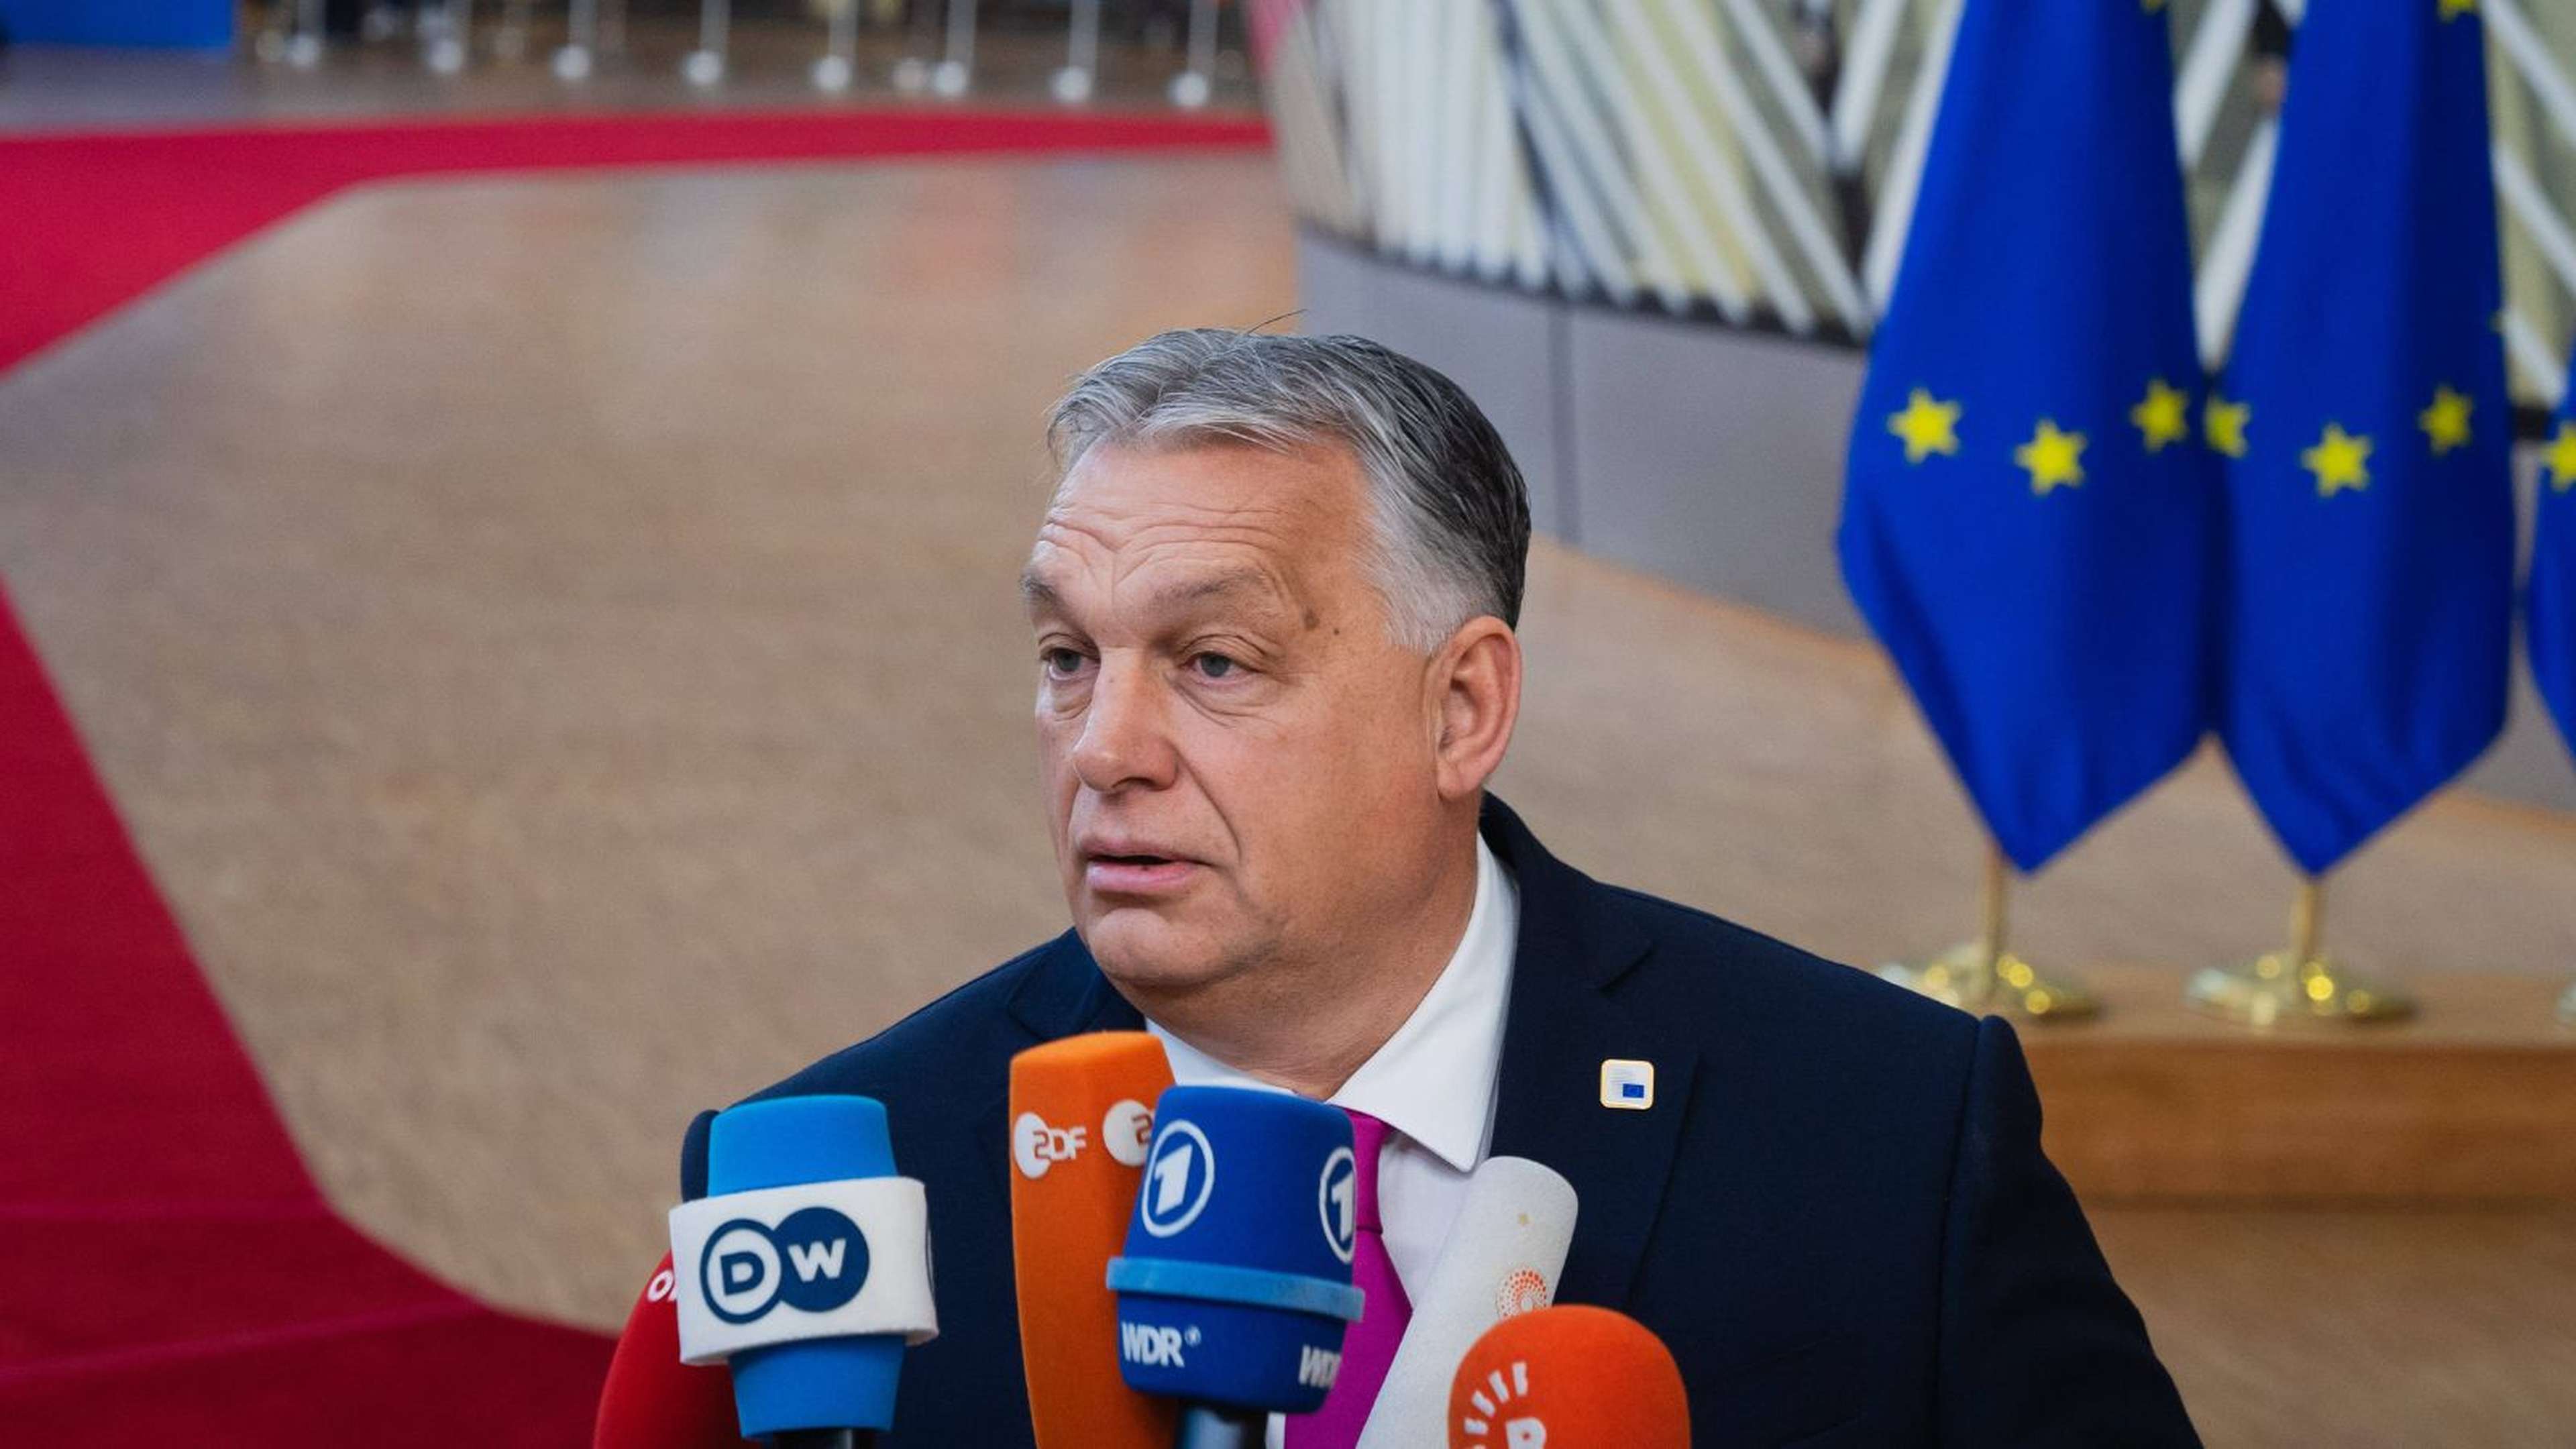 Viktor-Orban-Bruxelles-Commission-europeenne-Ukraine